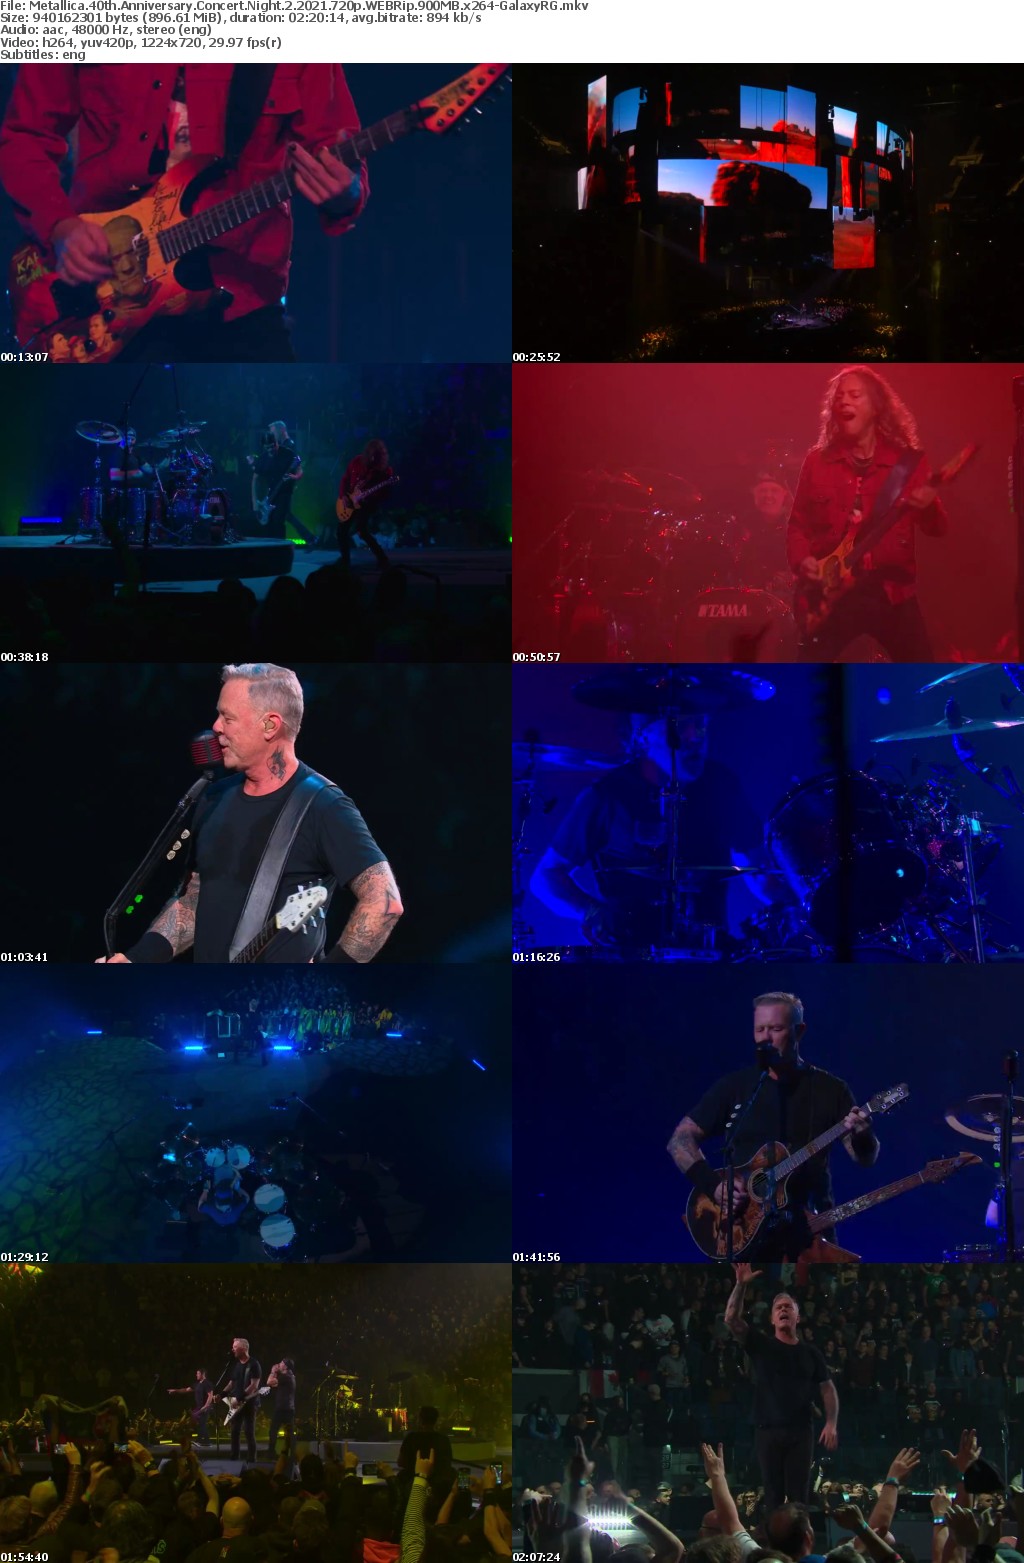 Metallica 40th Anniversary Concert Night 2 2021 720p WEBRip 900MB x264-GalaxyRG